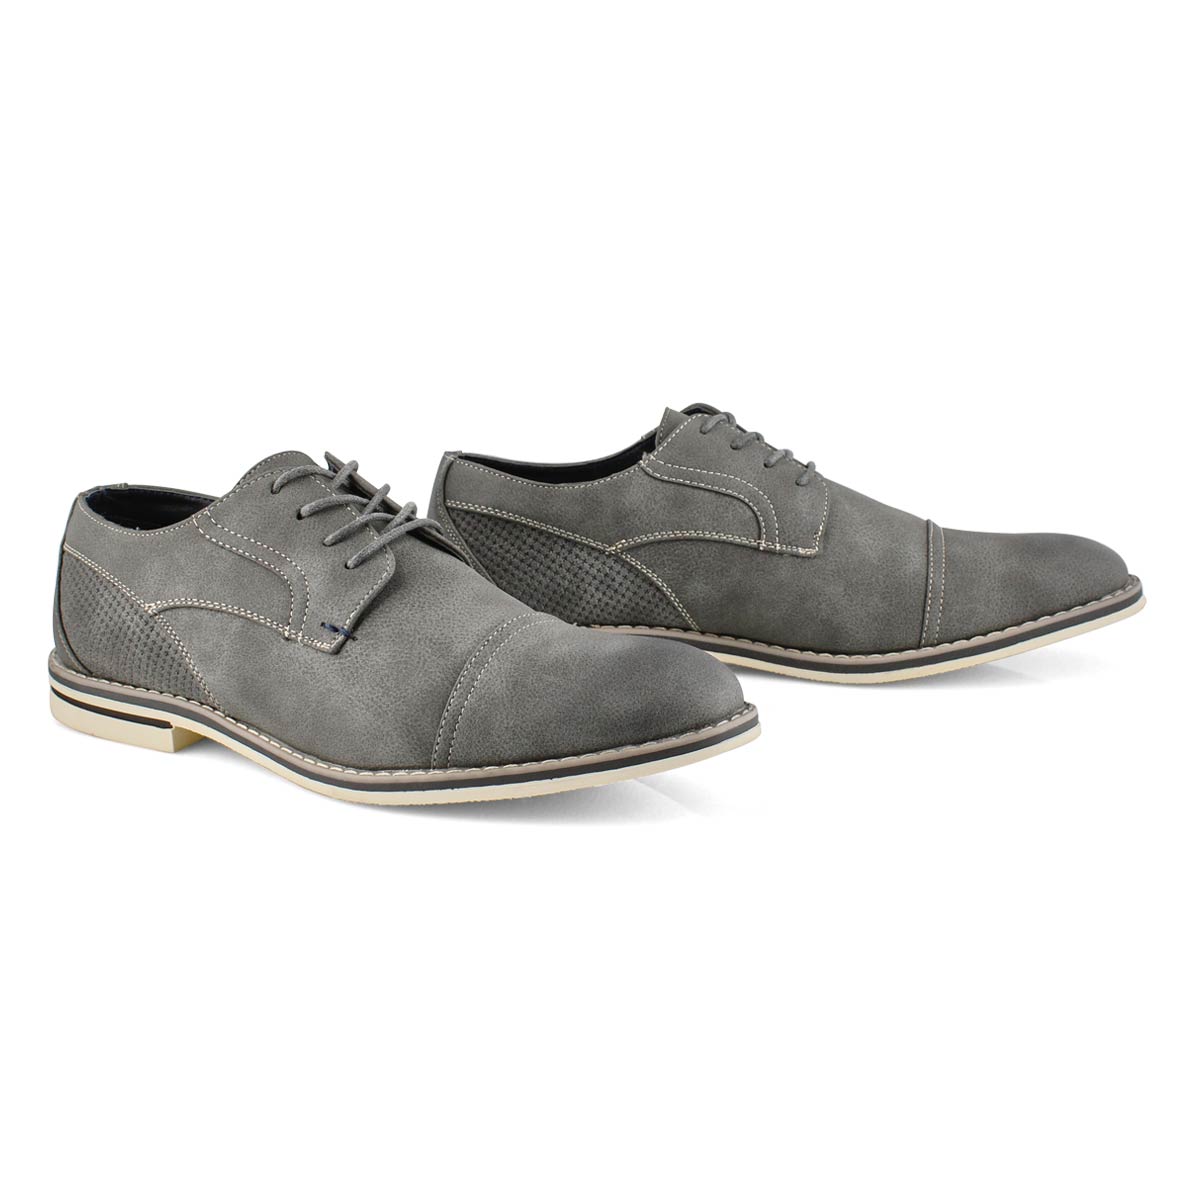 Men's Jack2 Casual Shoe - Grey